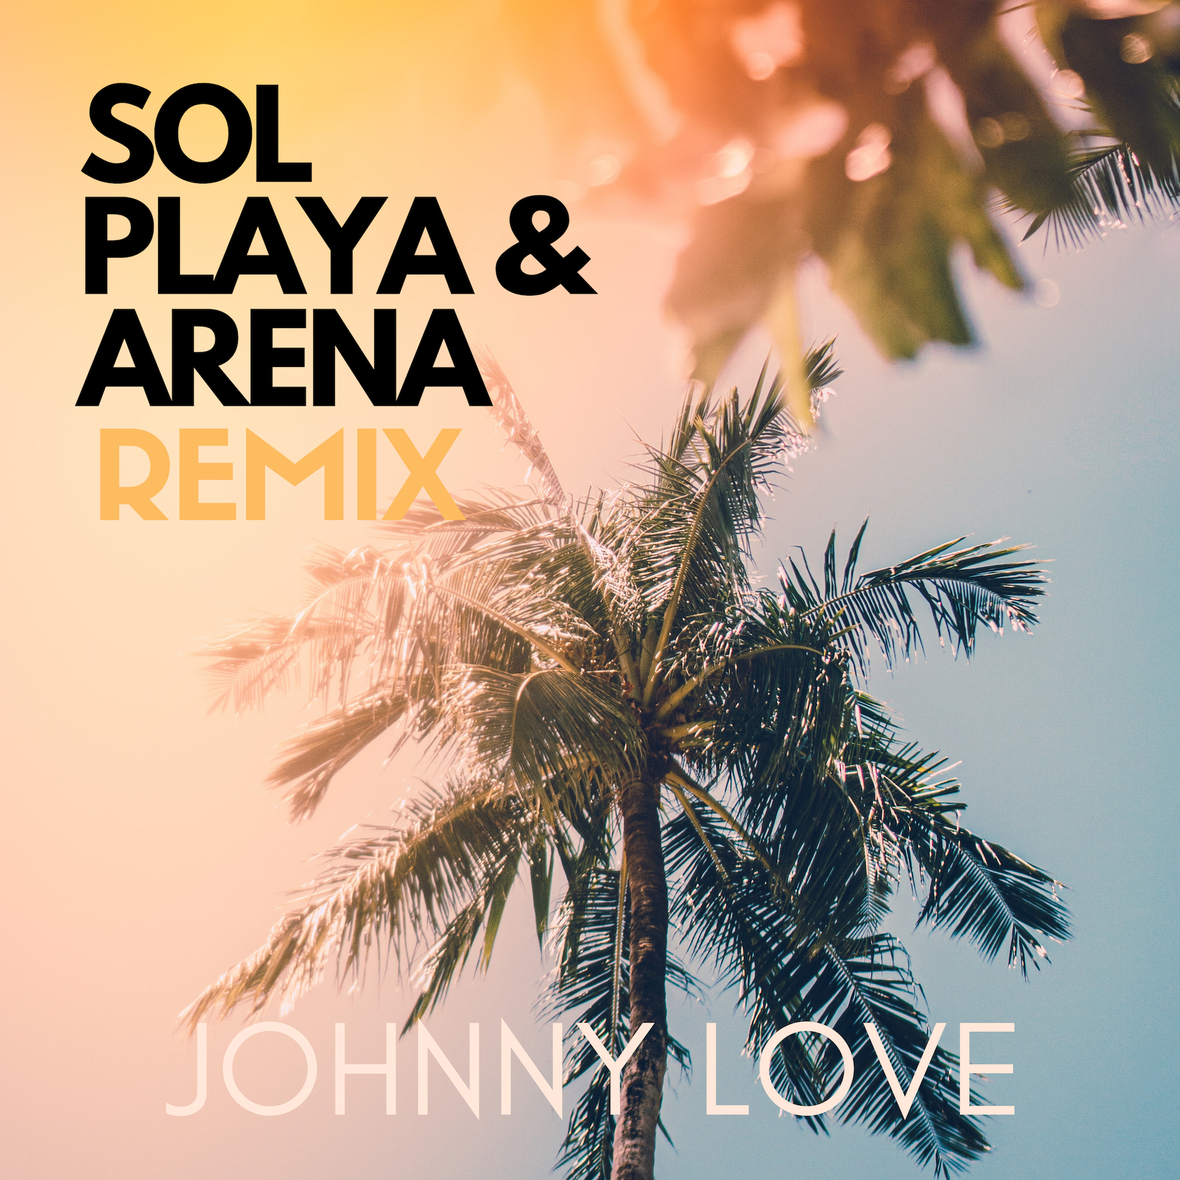 Sol Playa Arena Remix Single Cover